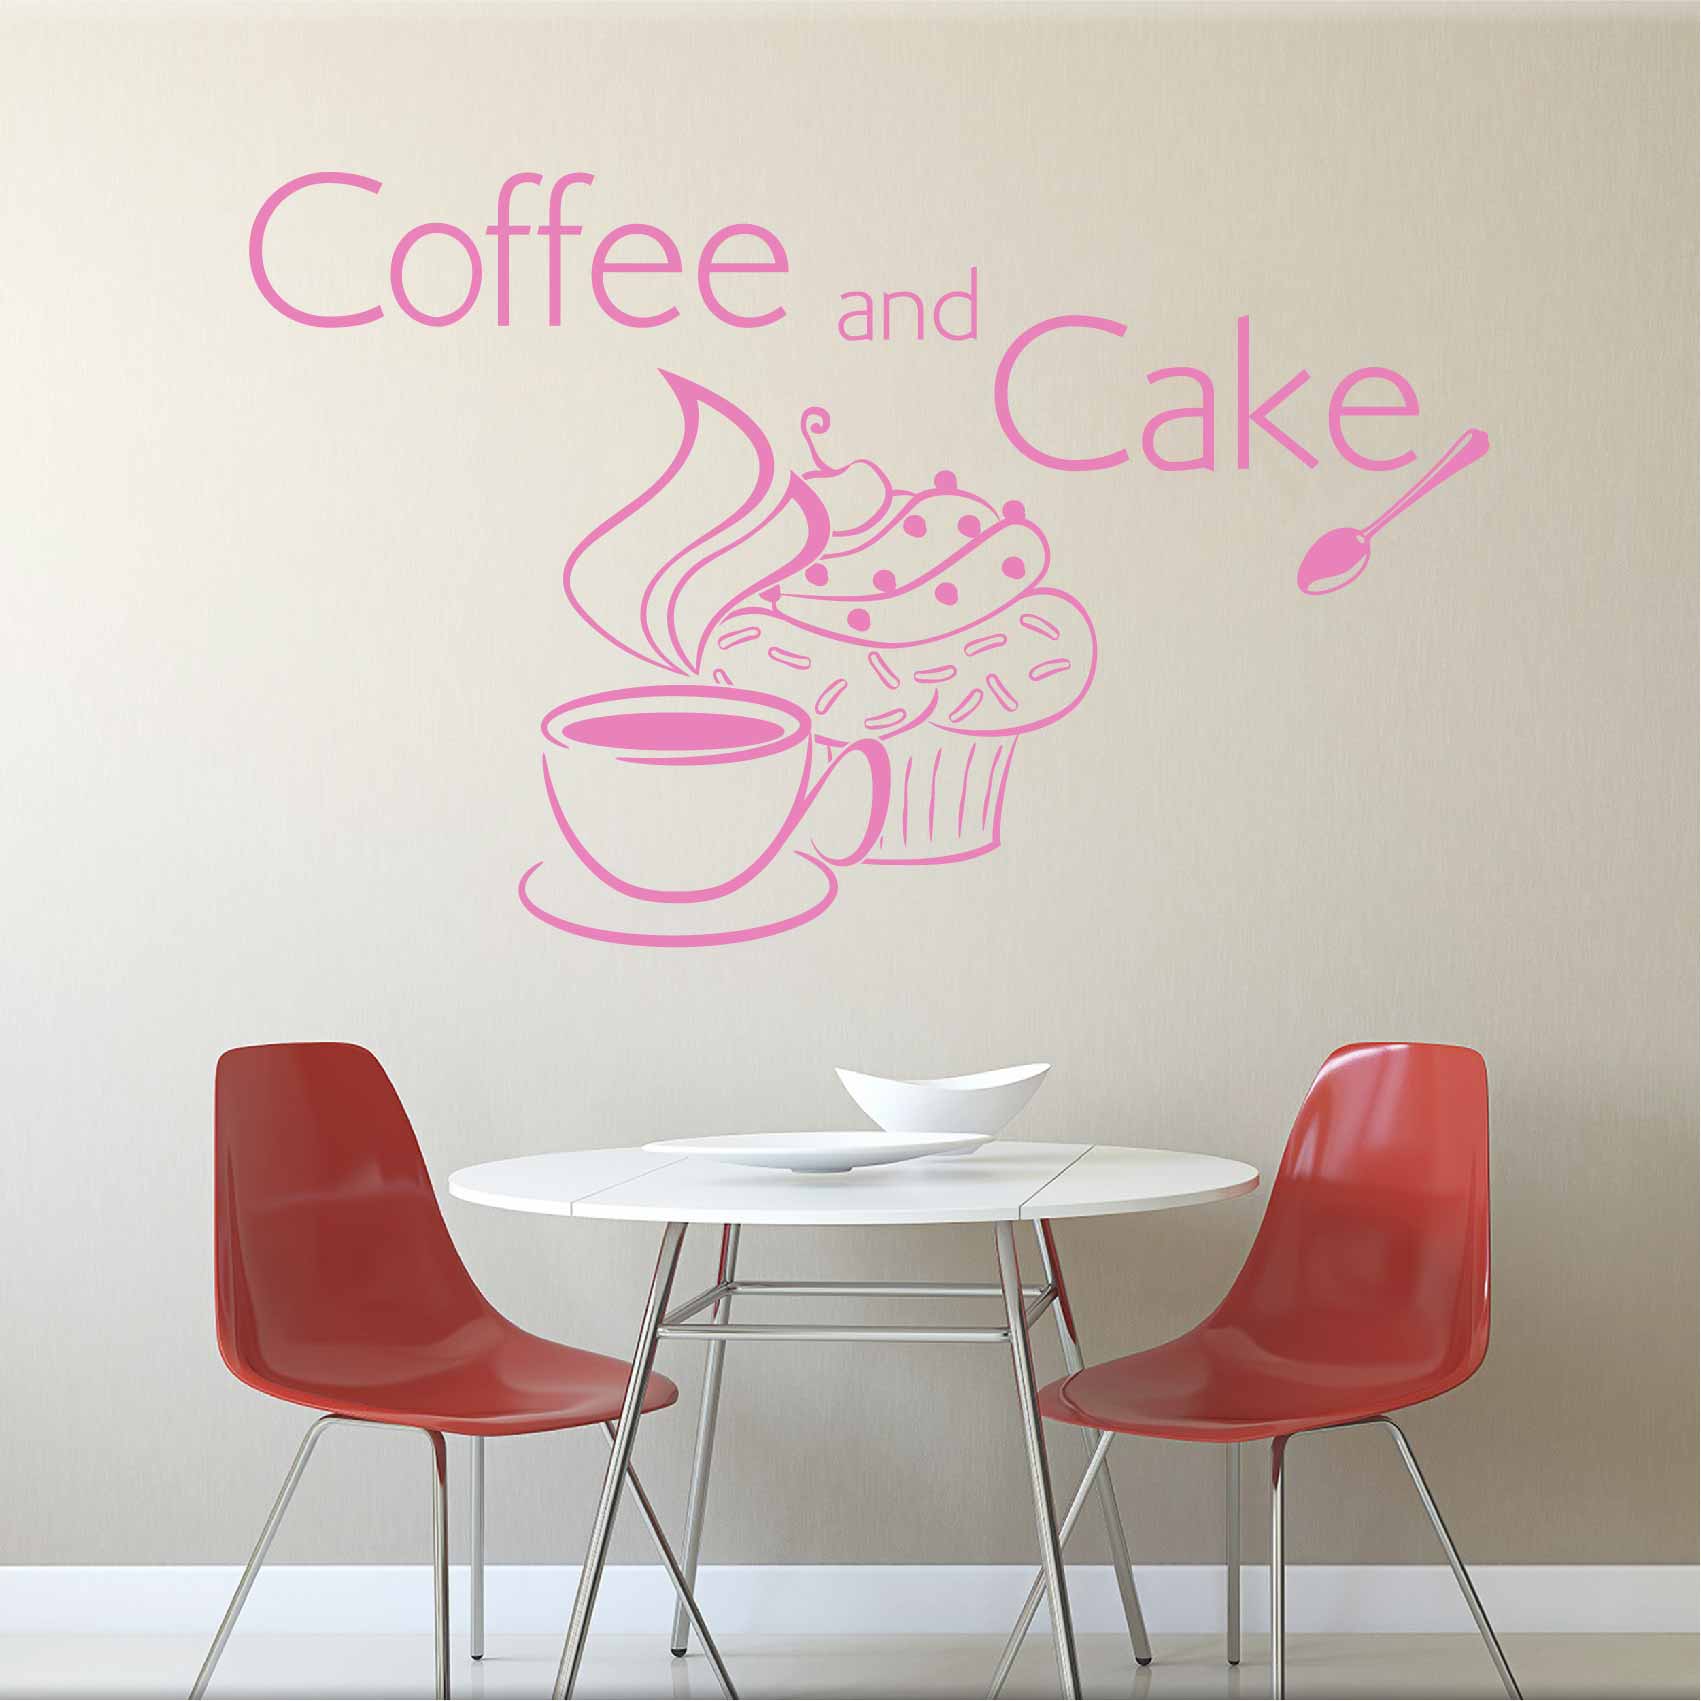 stickers-coffe-and-cupcake-ref24cupcake-autocollant-muraux-cuisine-salle-a-manger-salon-sticker-mural-deco-gateau-cupcakes-gateaux